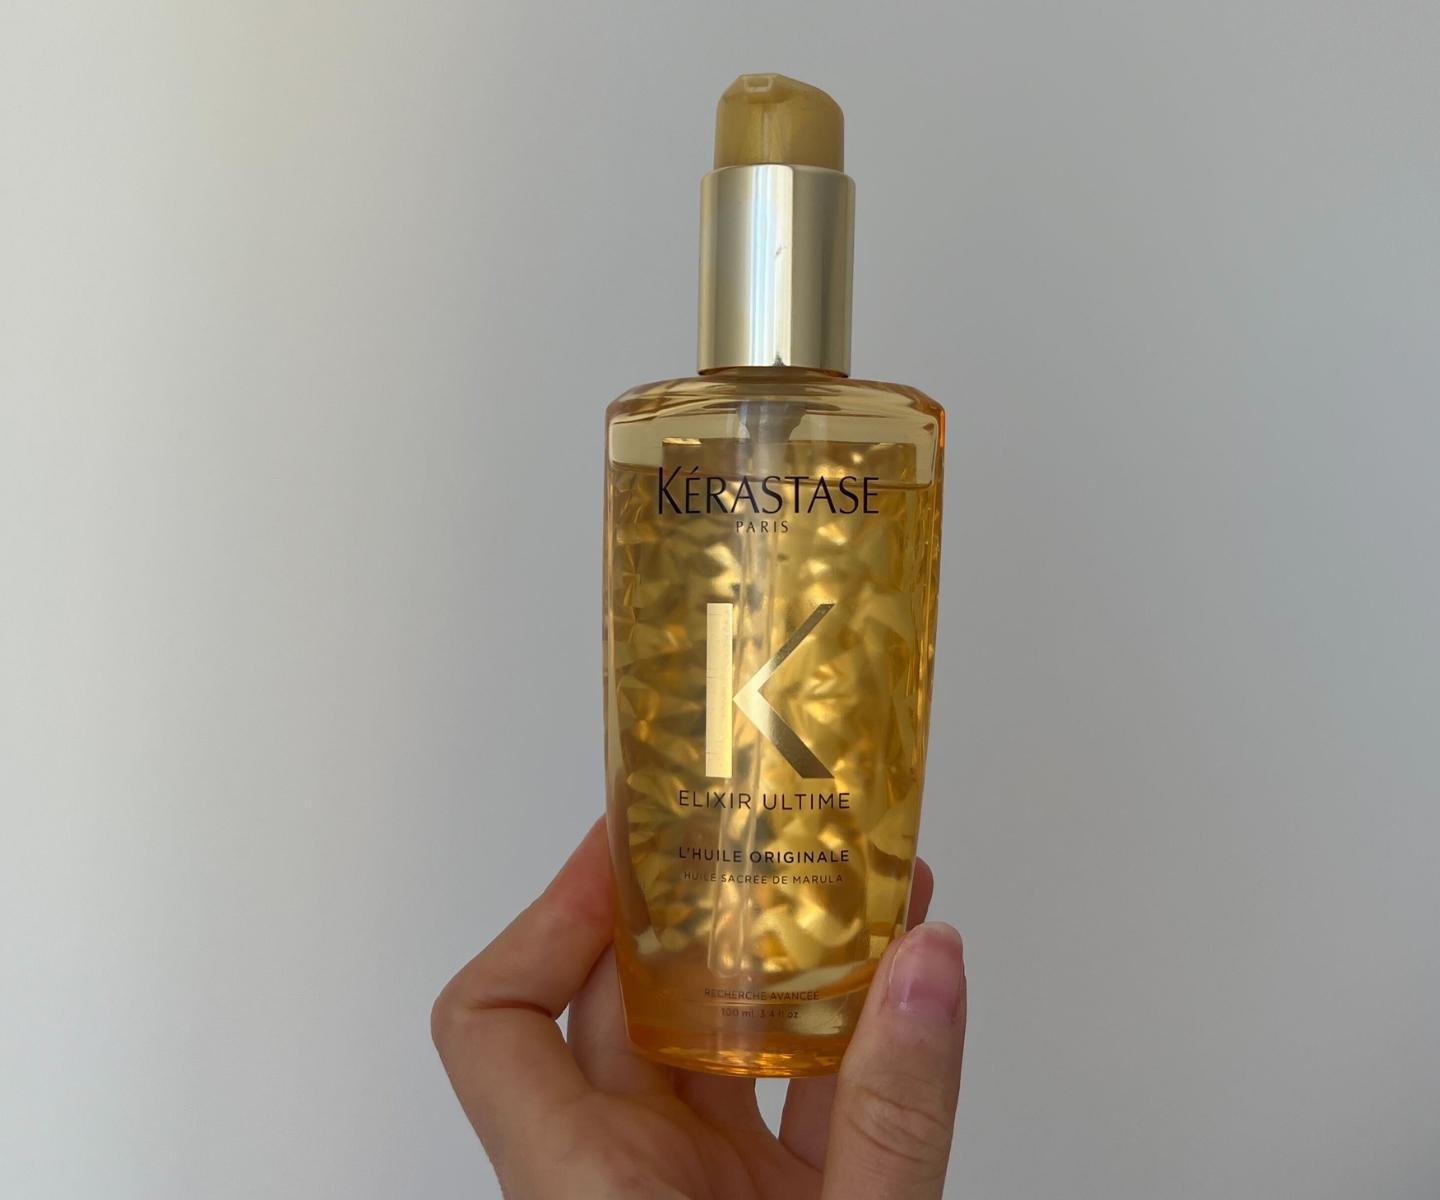 Kérastase Elixir Ultime Original Hair Oil in-article